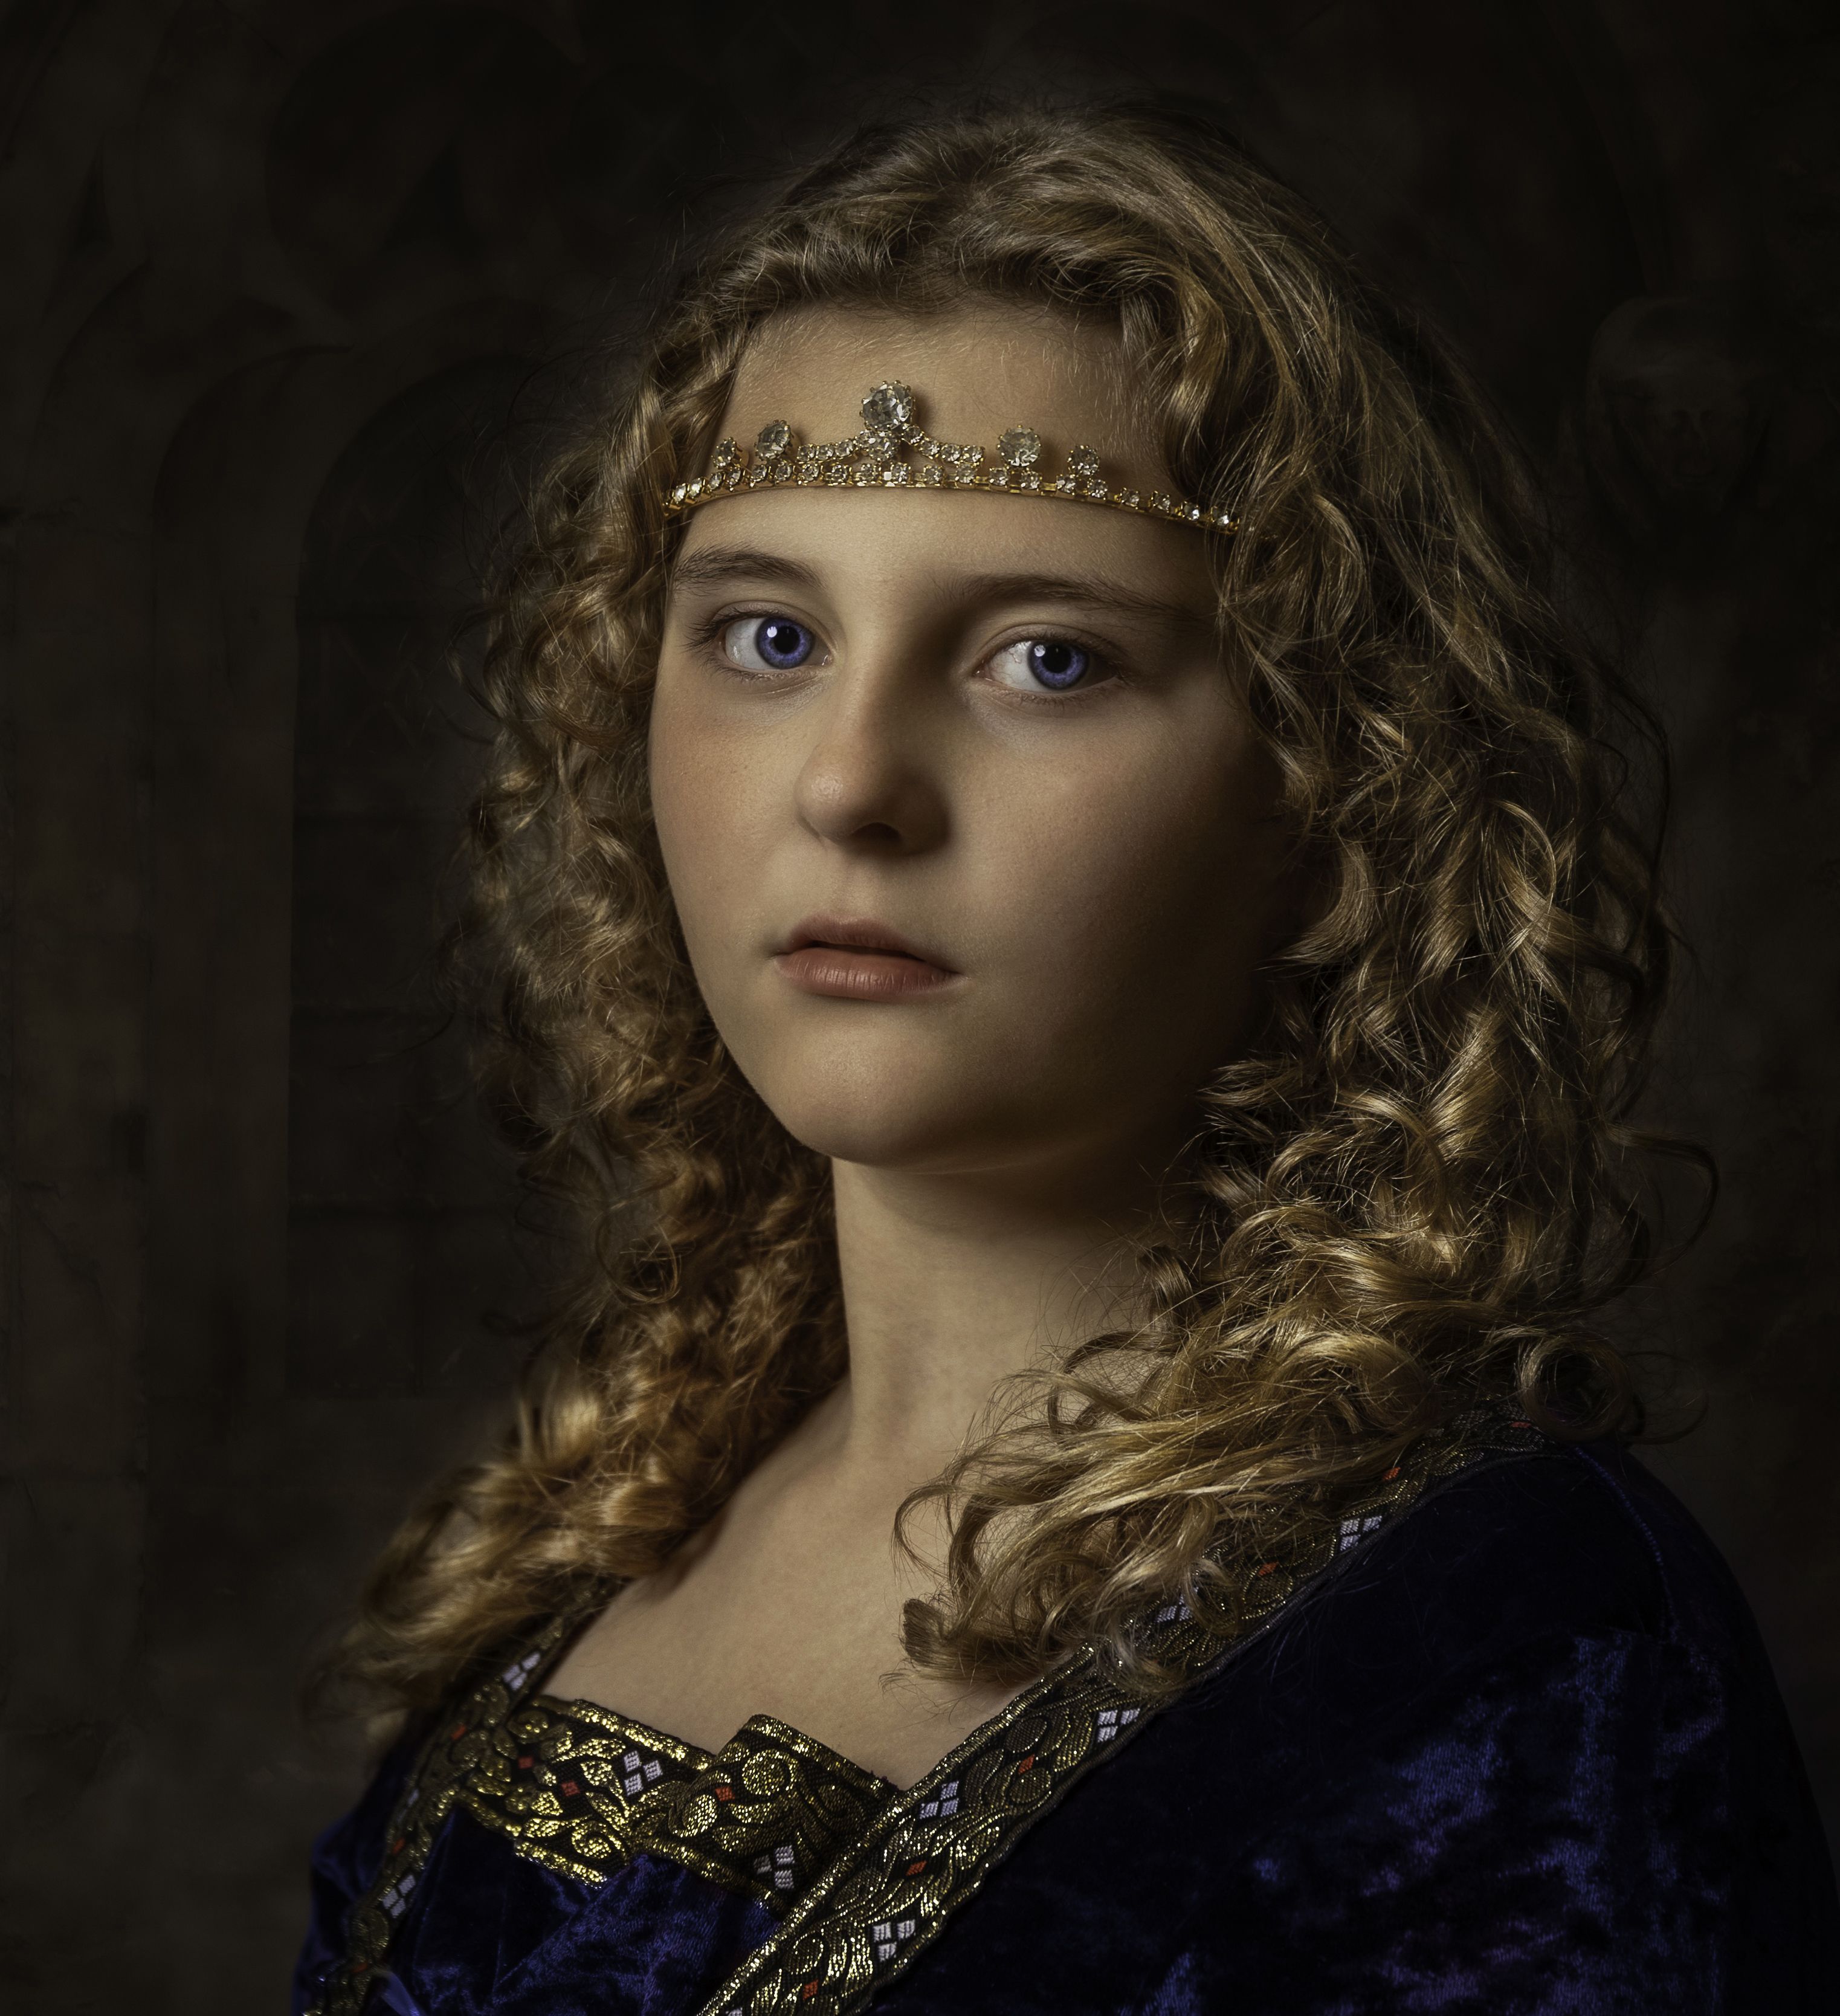 portrait of a princess. Photographer Eddie Leach